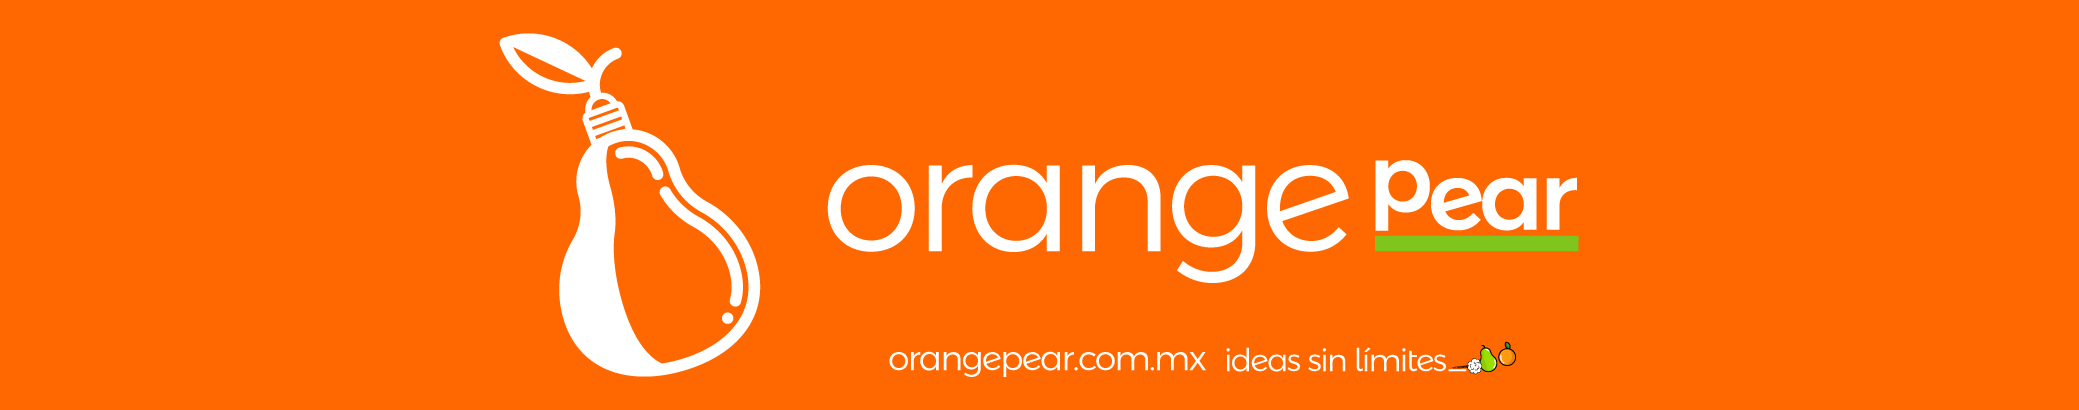 Orange Pear Mx's profile banner